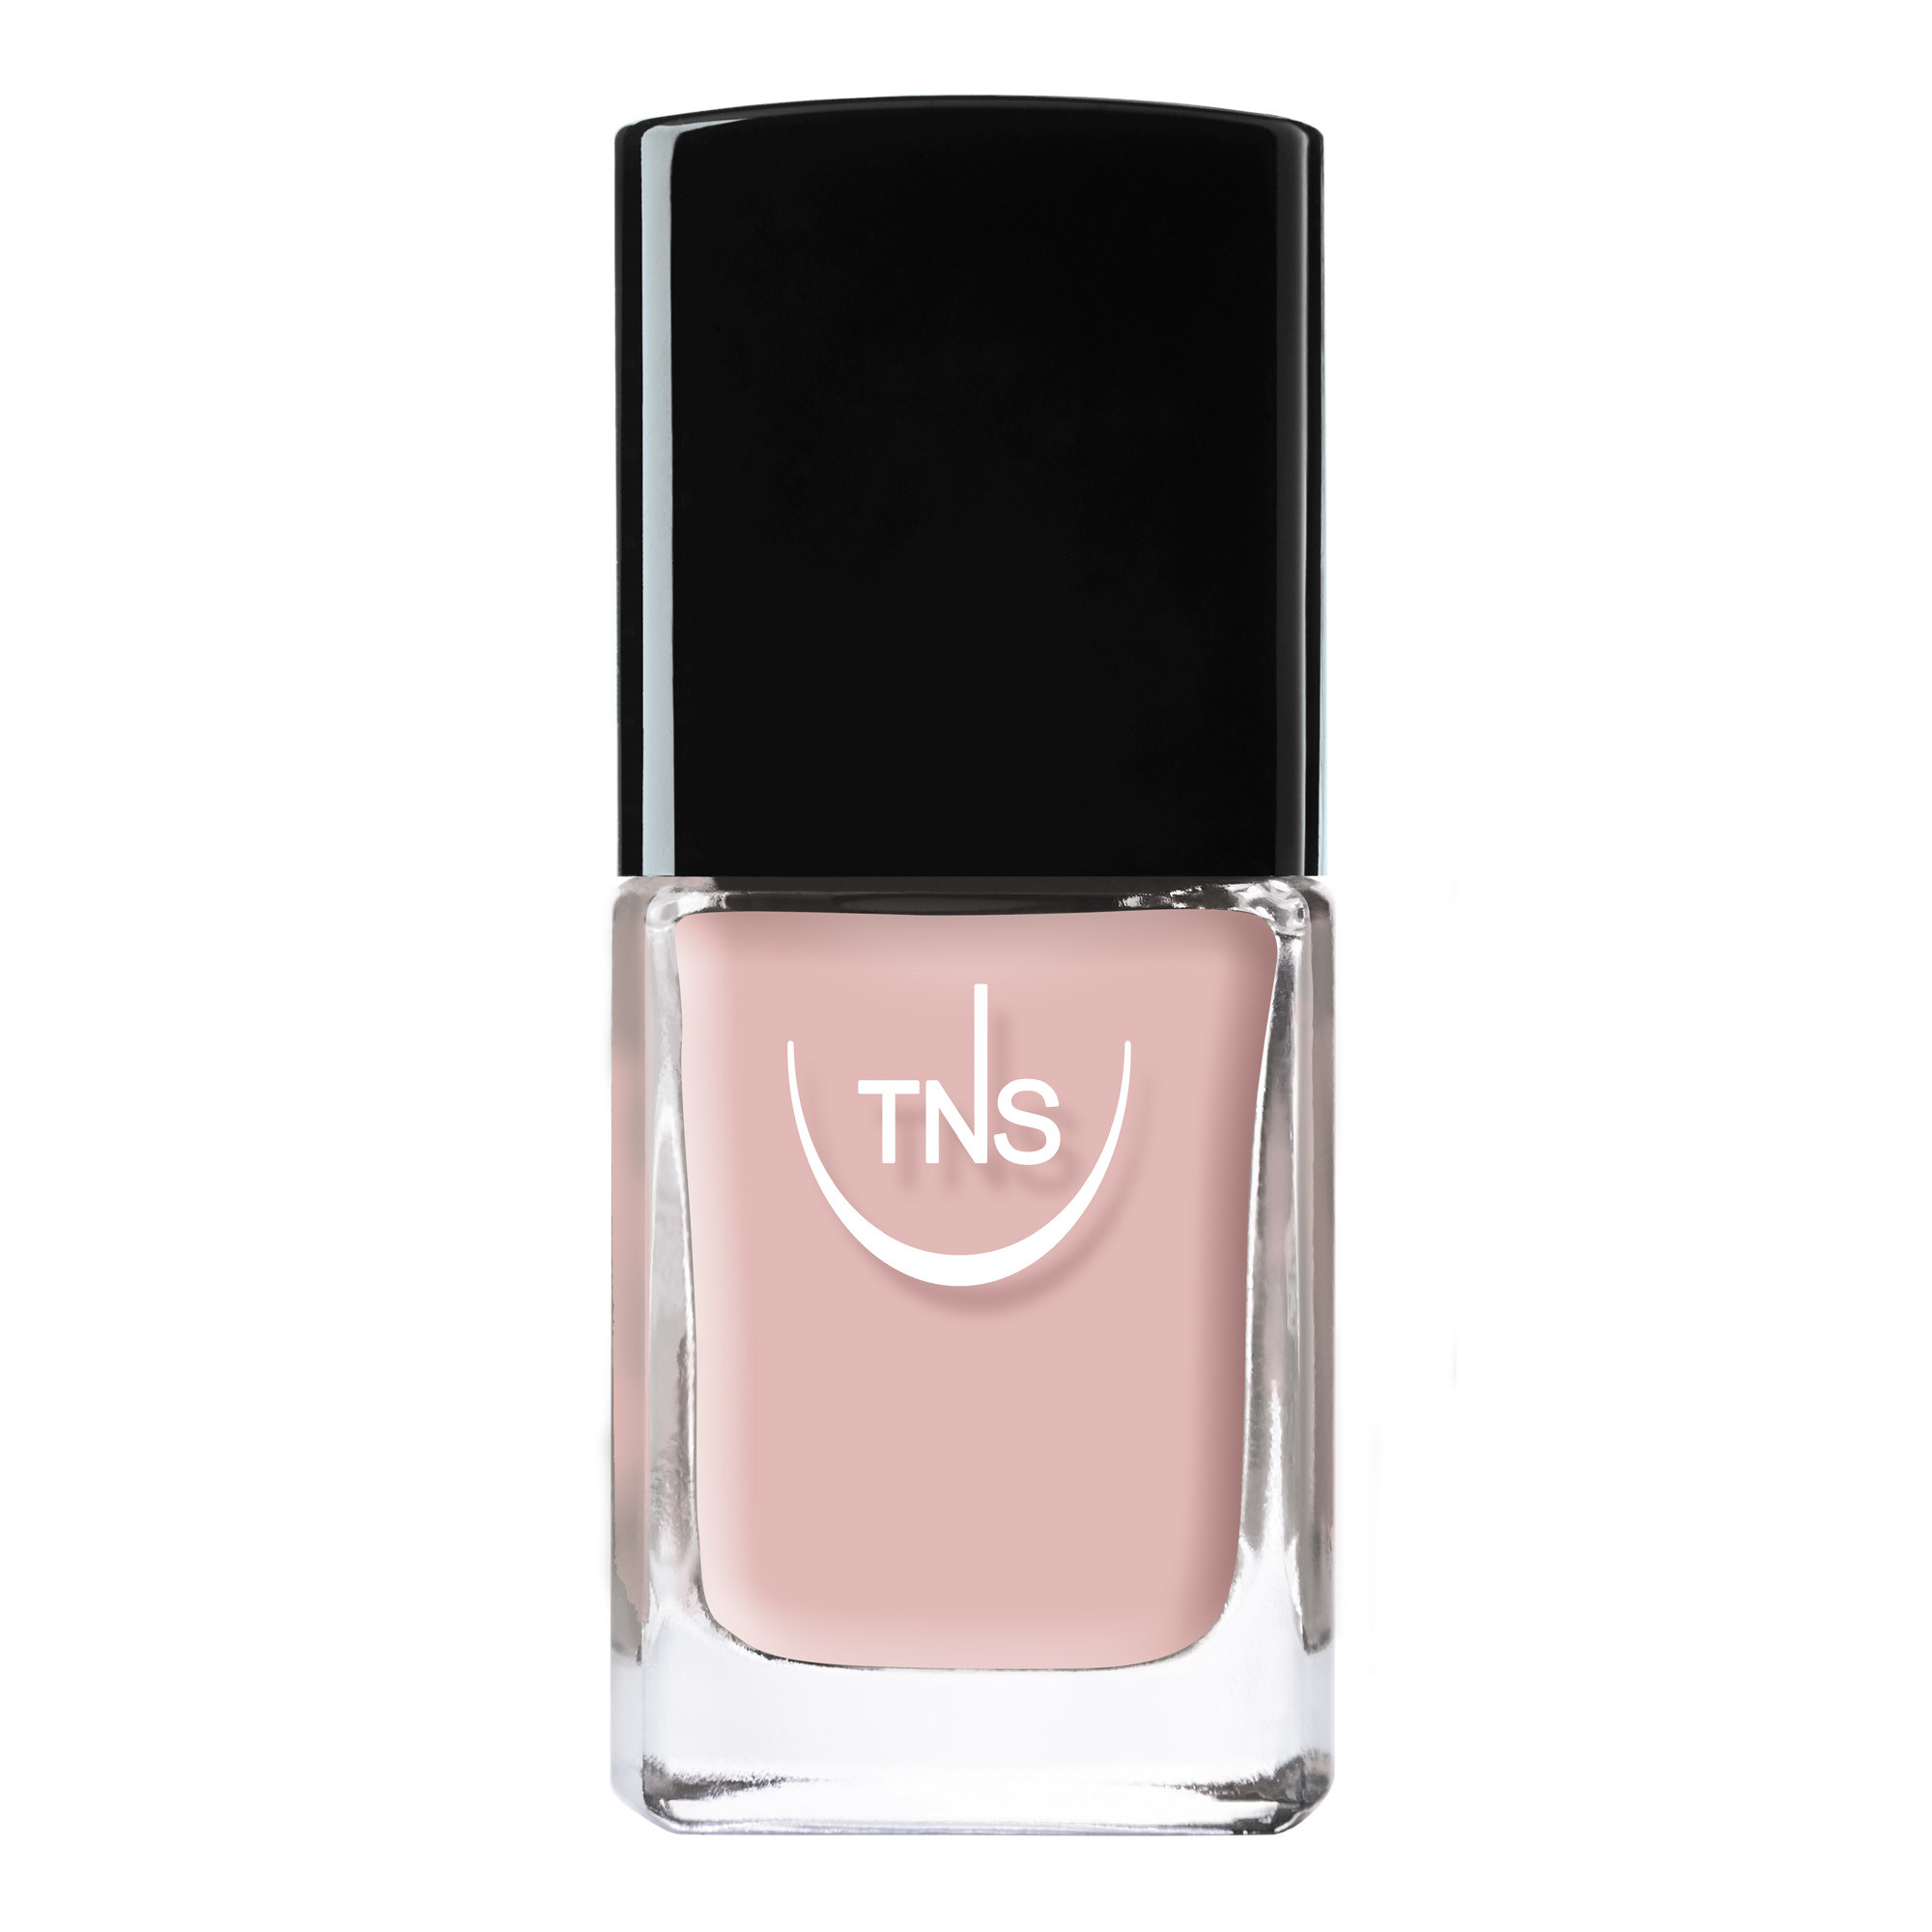 TNS Nail polish Light Touch light nude pink 10 ml